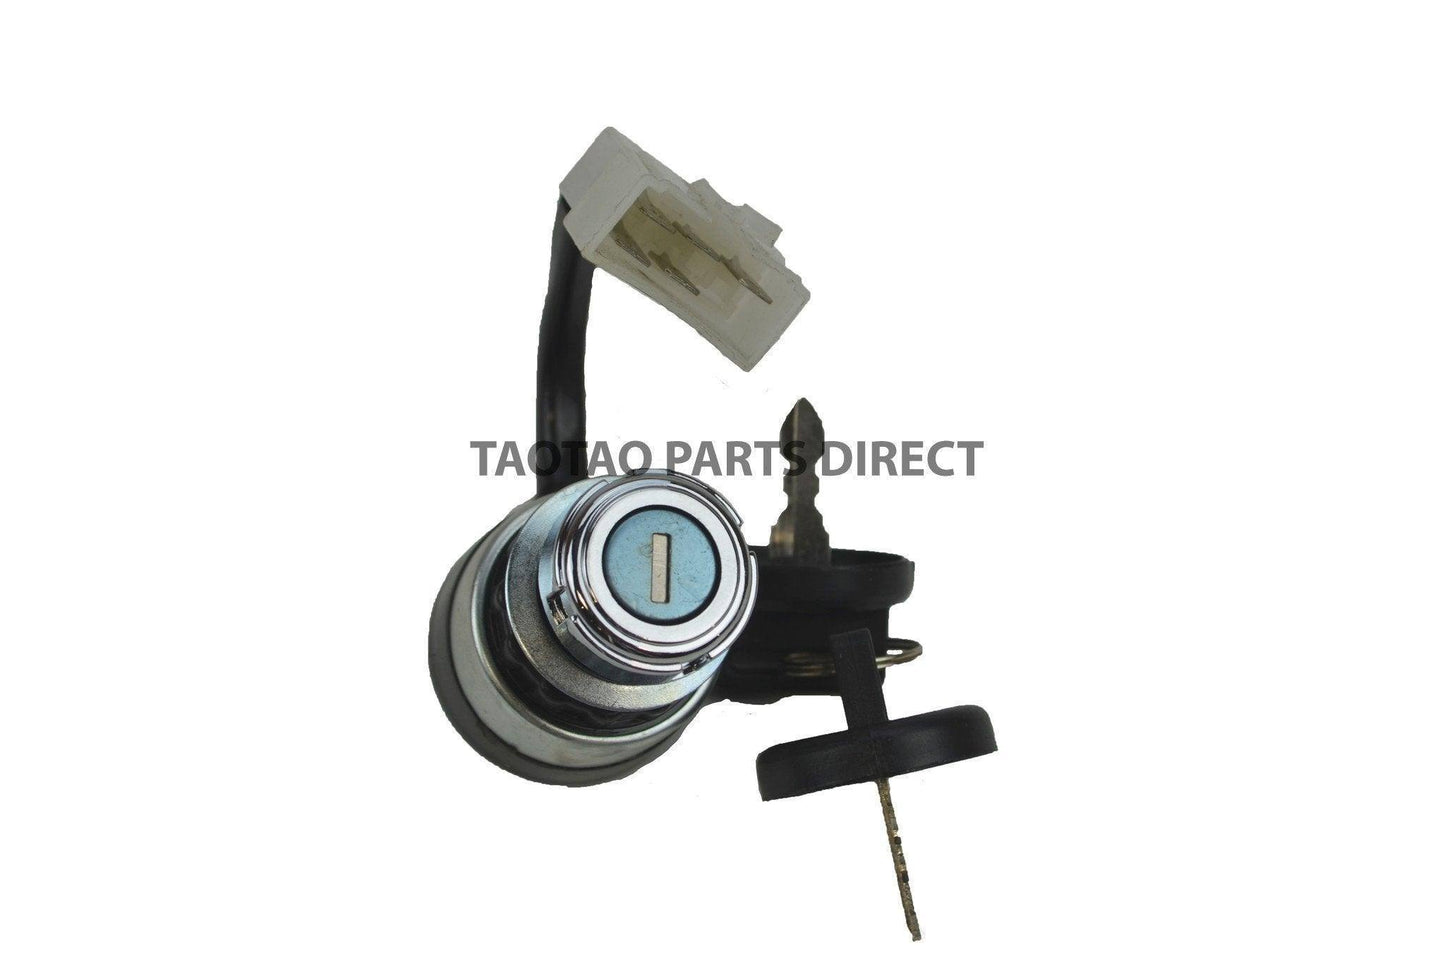 Go Kart Key Ignition - TaoTao Parts Direct